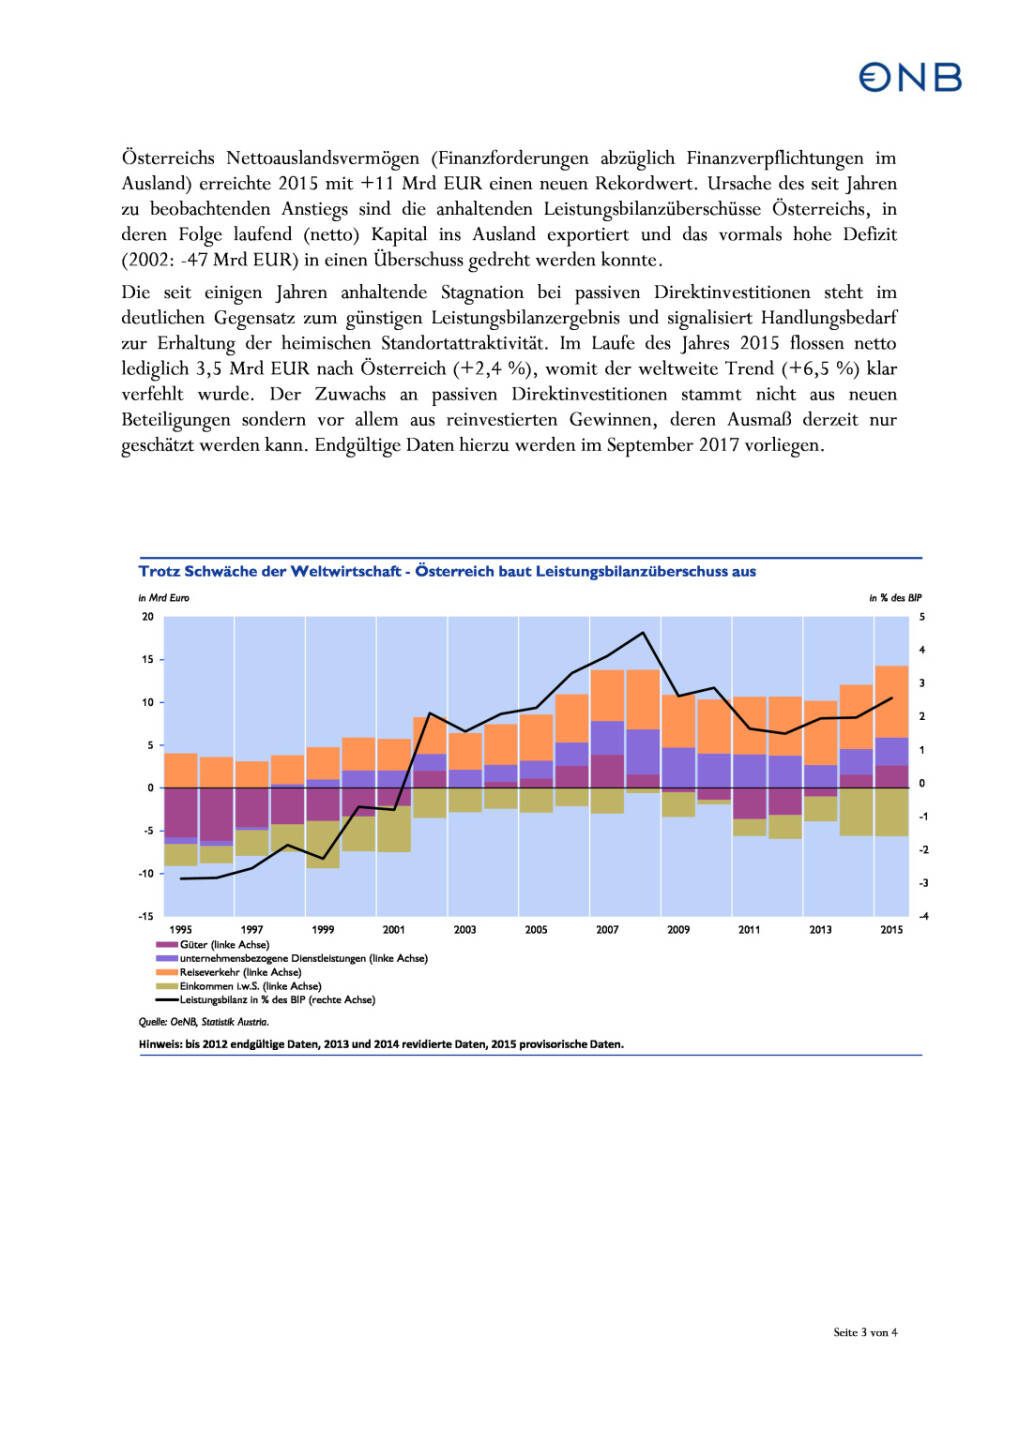 OeNB: Österreichs Exporteure wettbewerbsfähig, Seite 3/4, komplettes Dokument unter http://boerse-social.com/static/uploads/file_958_oenb_osterreichs_exporteure_wettbewerbsfahig.pdf